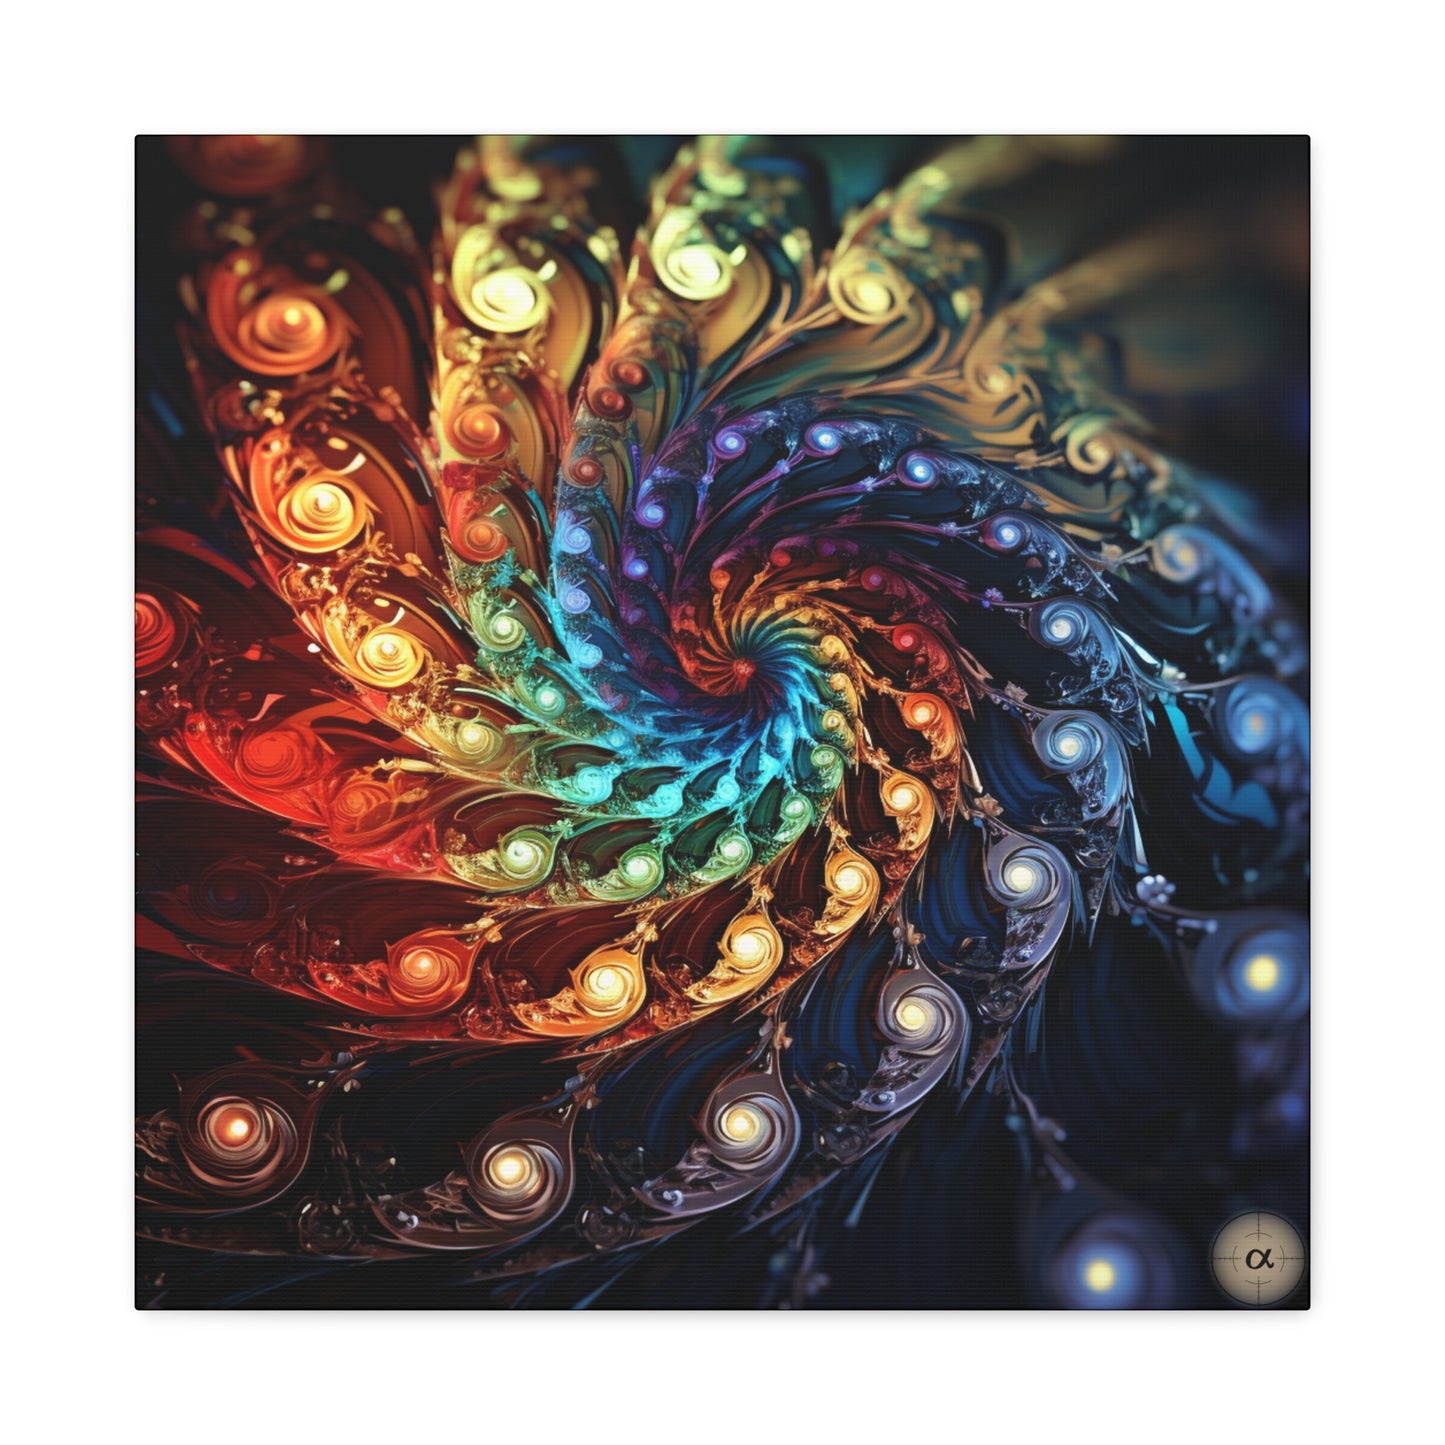 Art by Kendyll: "Peacock Pinwheel" on Canvas